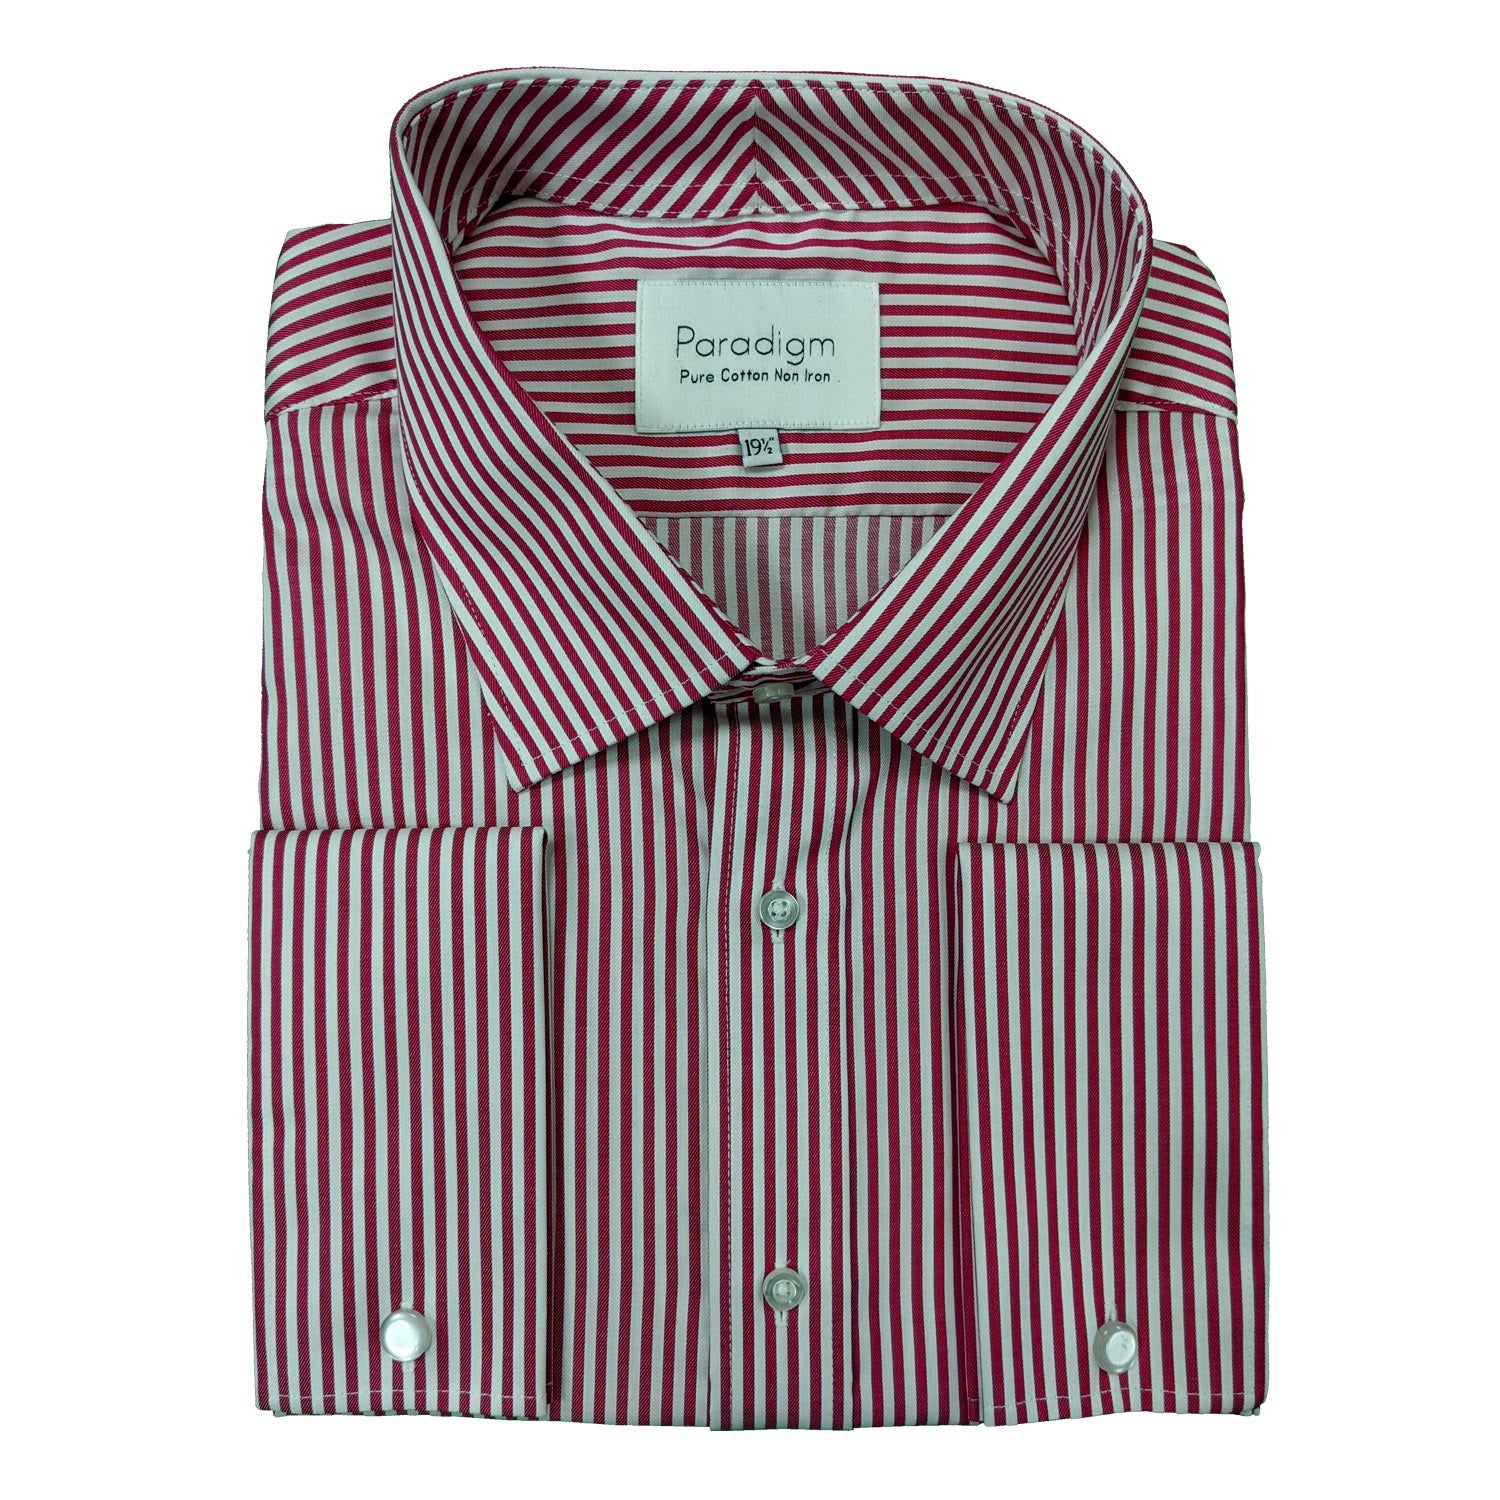 Paradigm Double Cuff Stripe Shirt - CXD7030 - Cherry 1